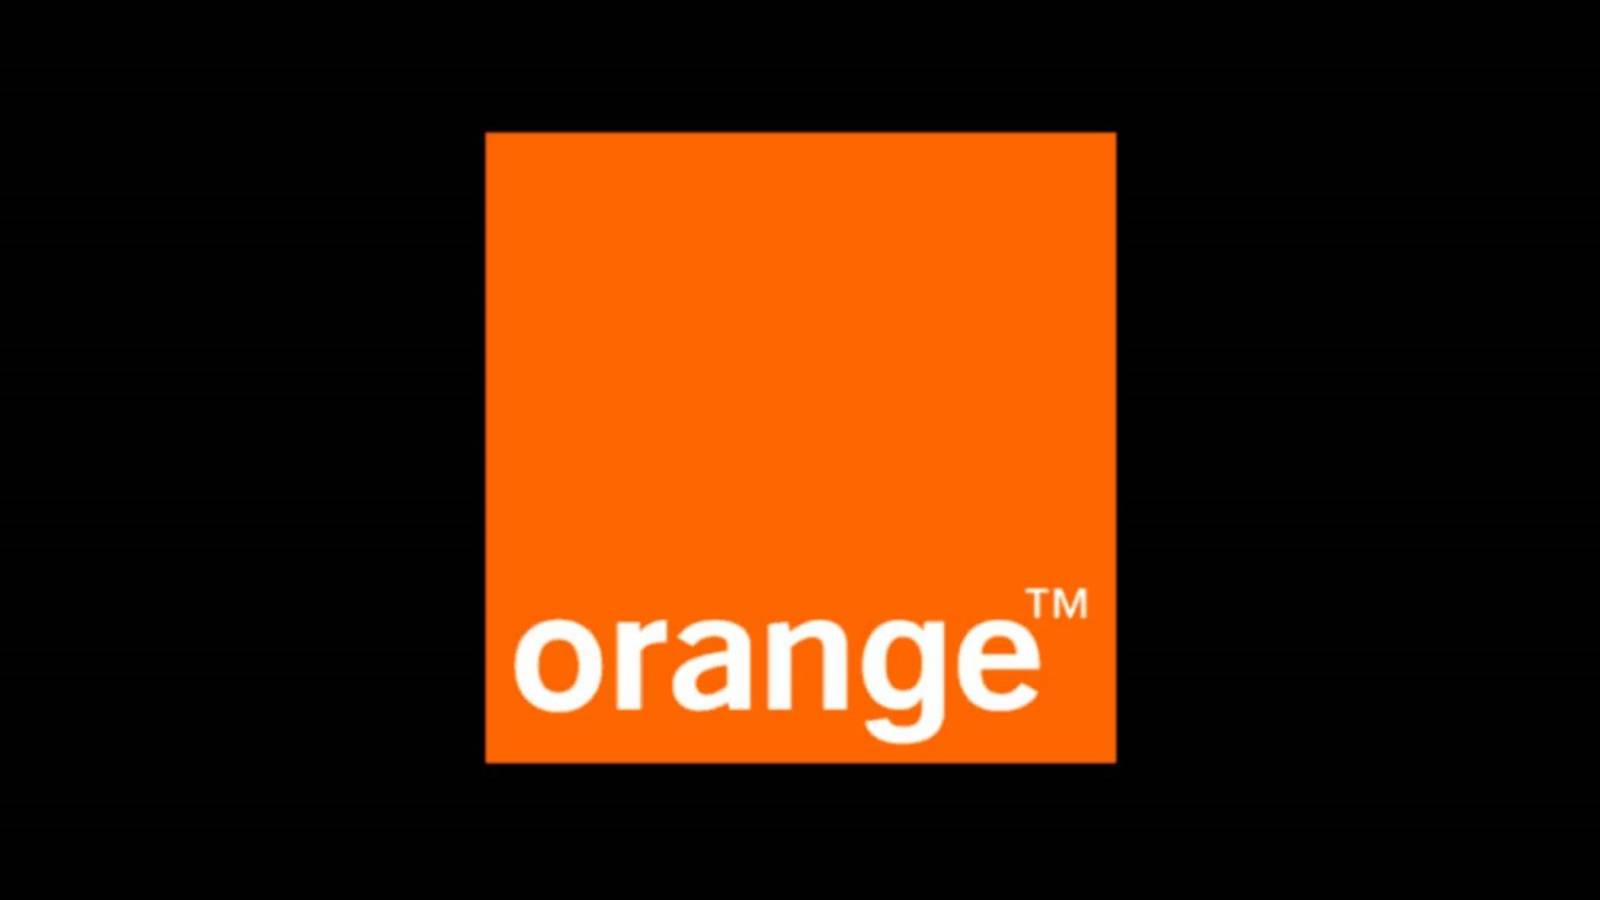 Orange virtual